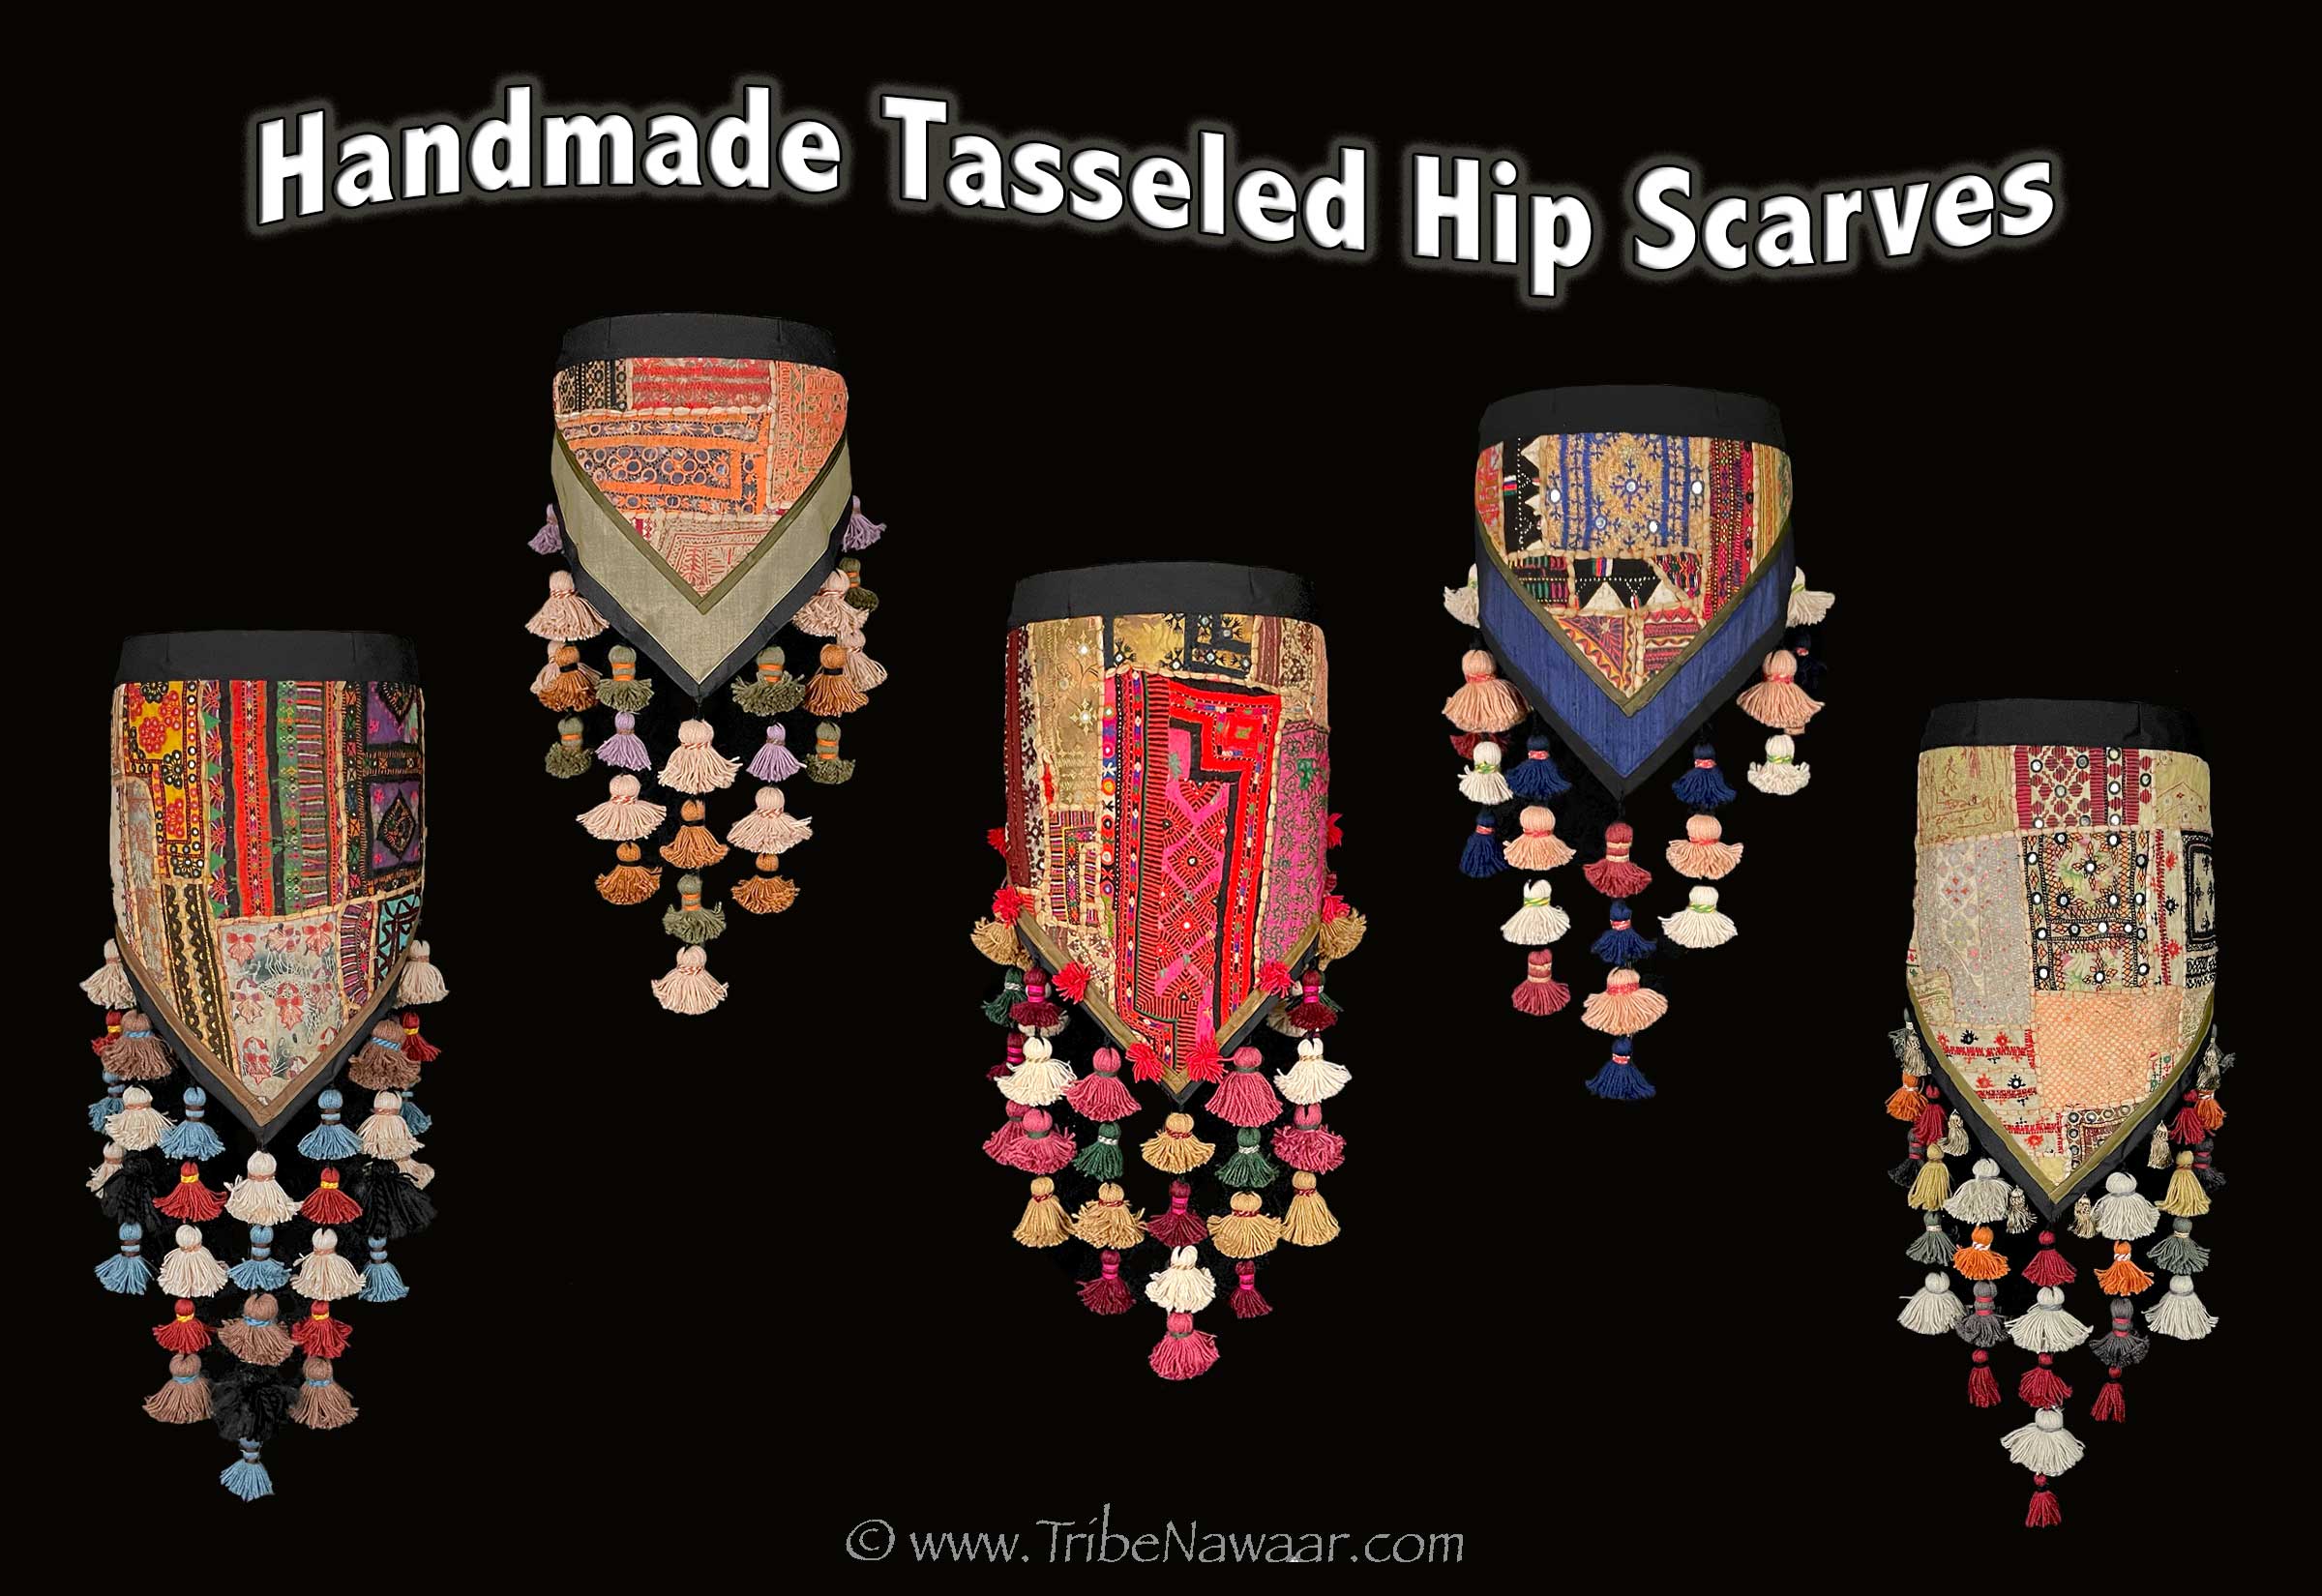 New handmade tasseled hip scarves from The Nawaar Marketplace at www.TribeNawaar.com